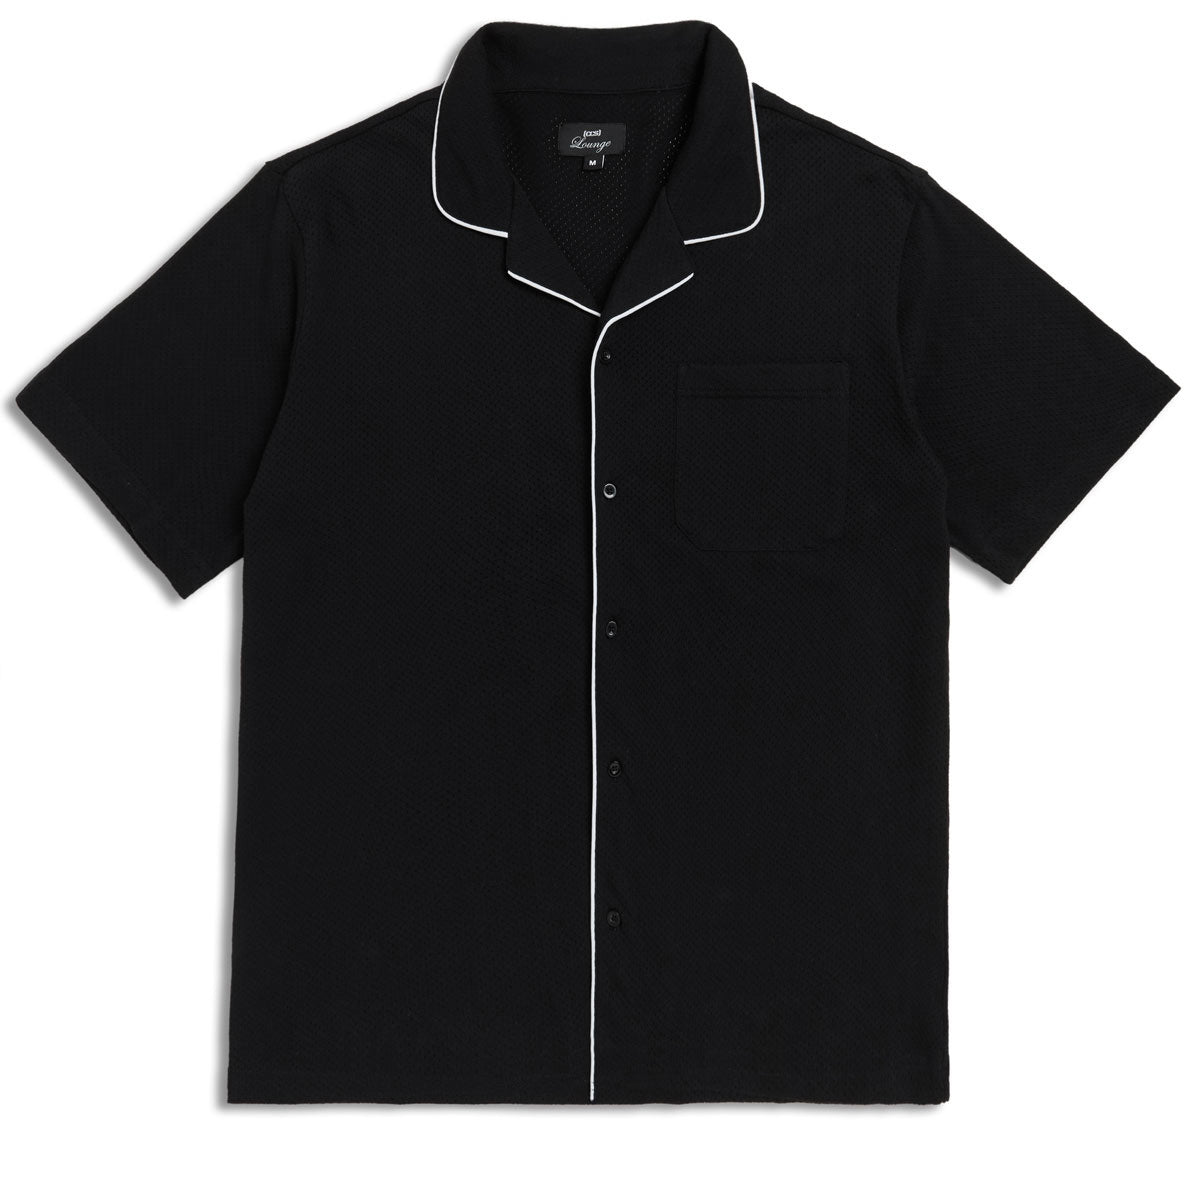 CCS Lounge Mesh Shirt - Black image 1